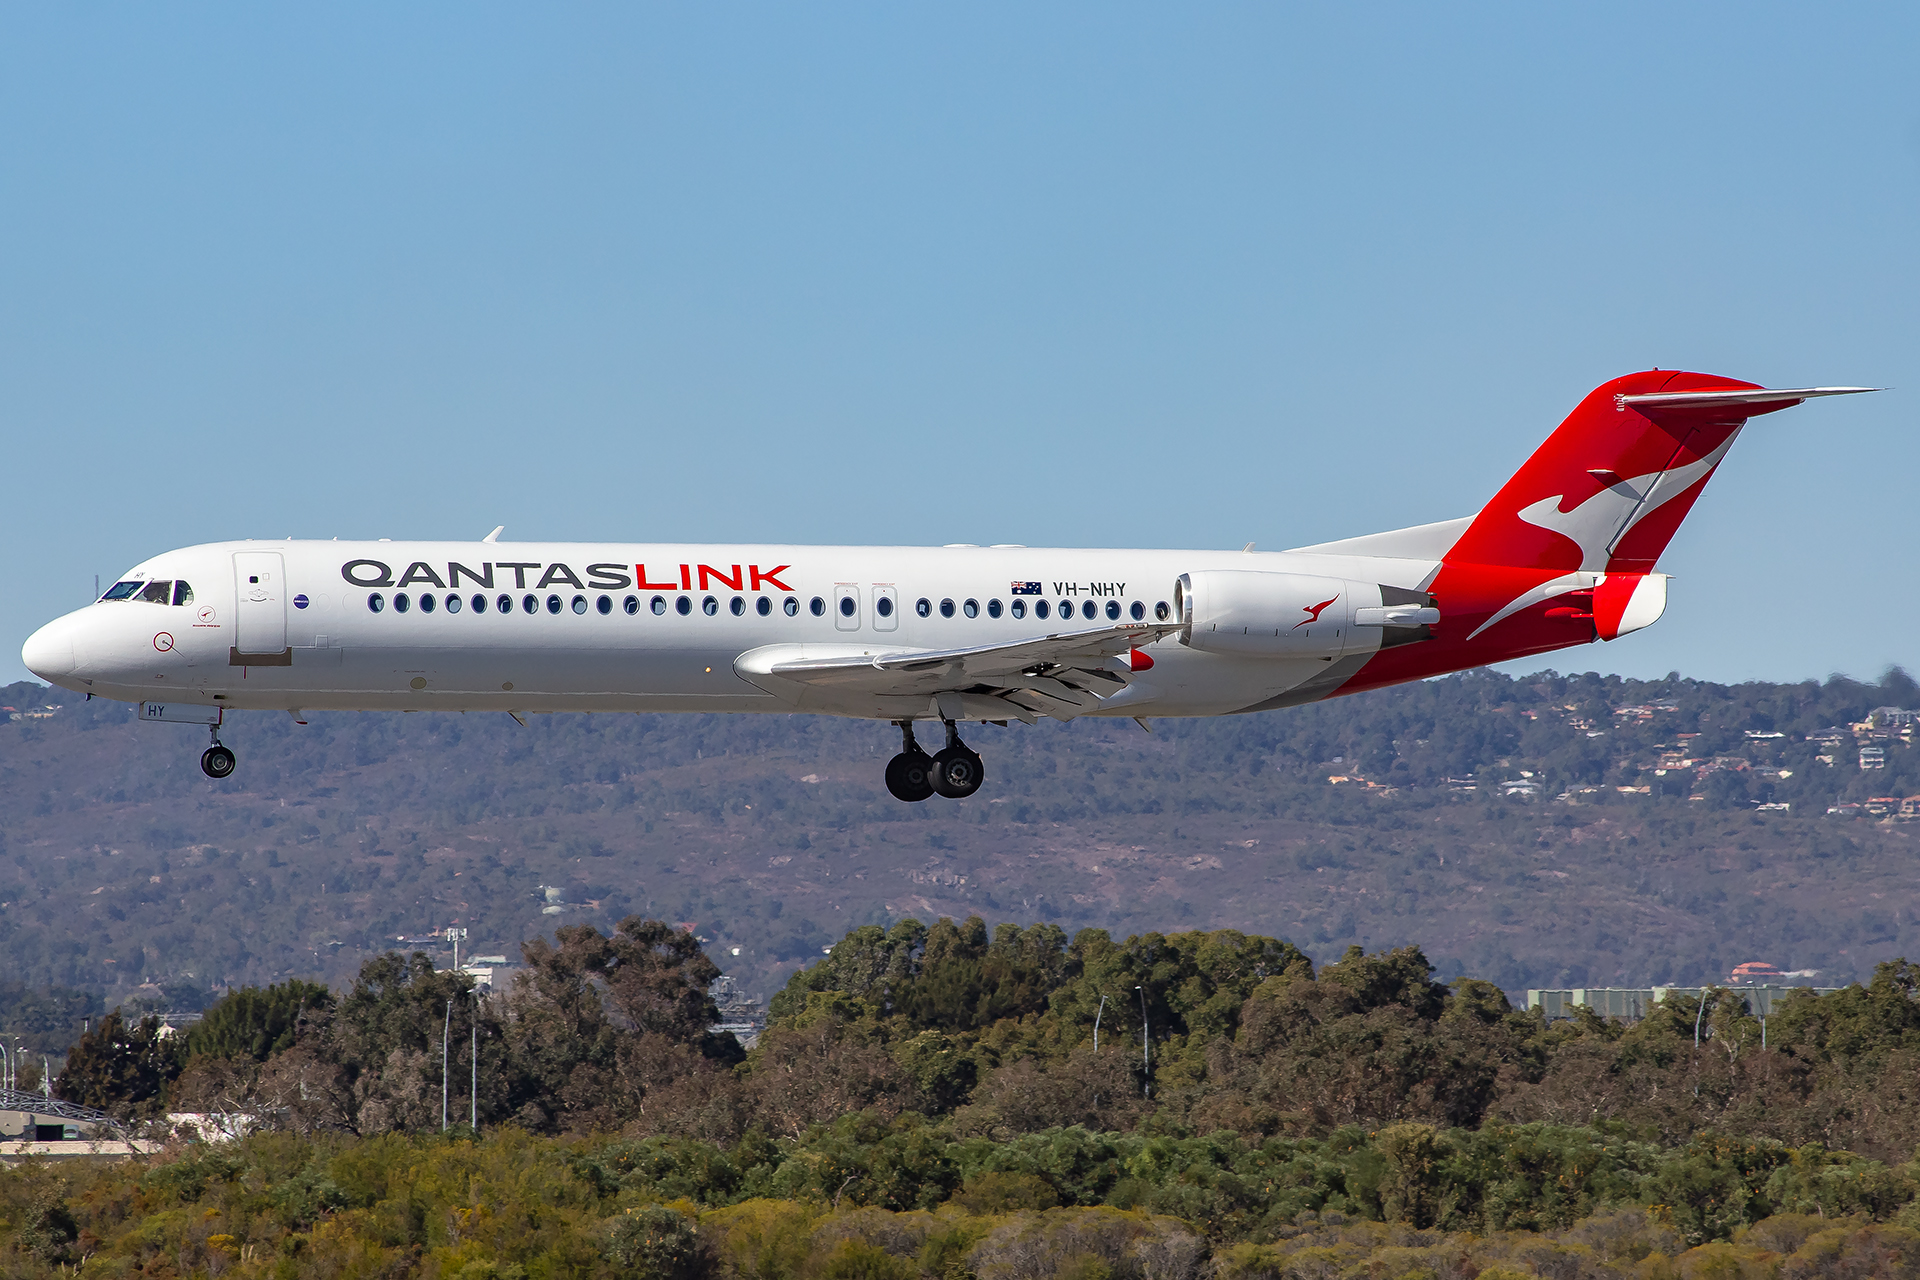 VH-NHY/VHNHY Qantaslink Fokker 100 Airframe Information - AVSpotters.com